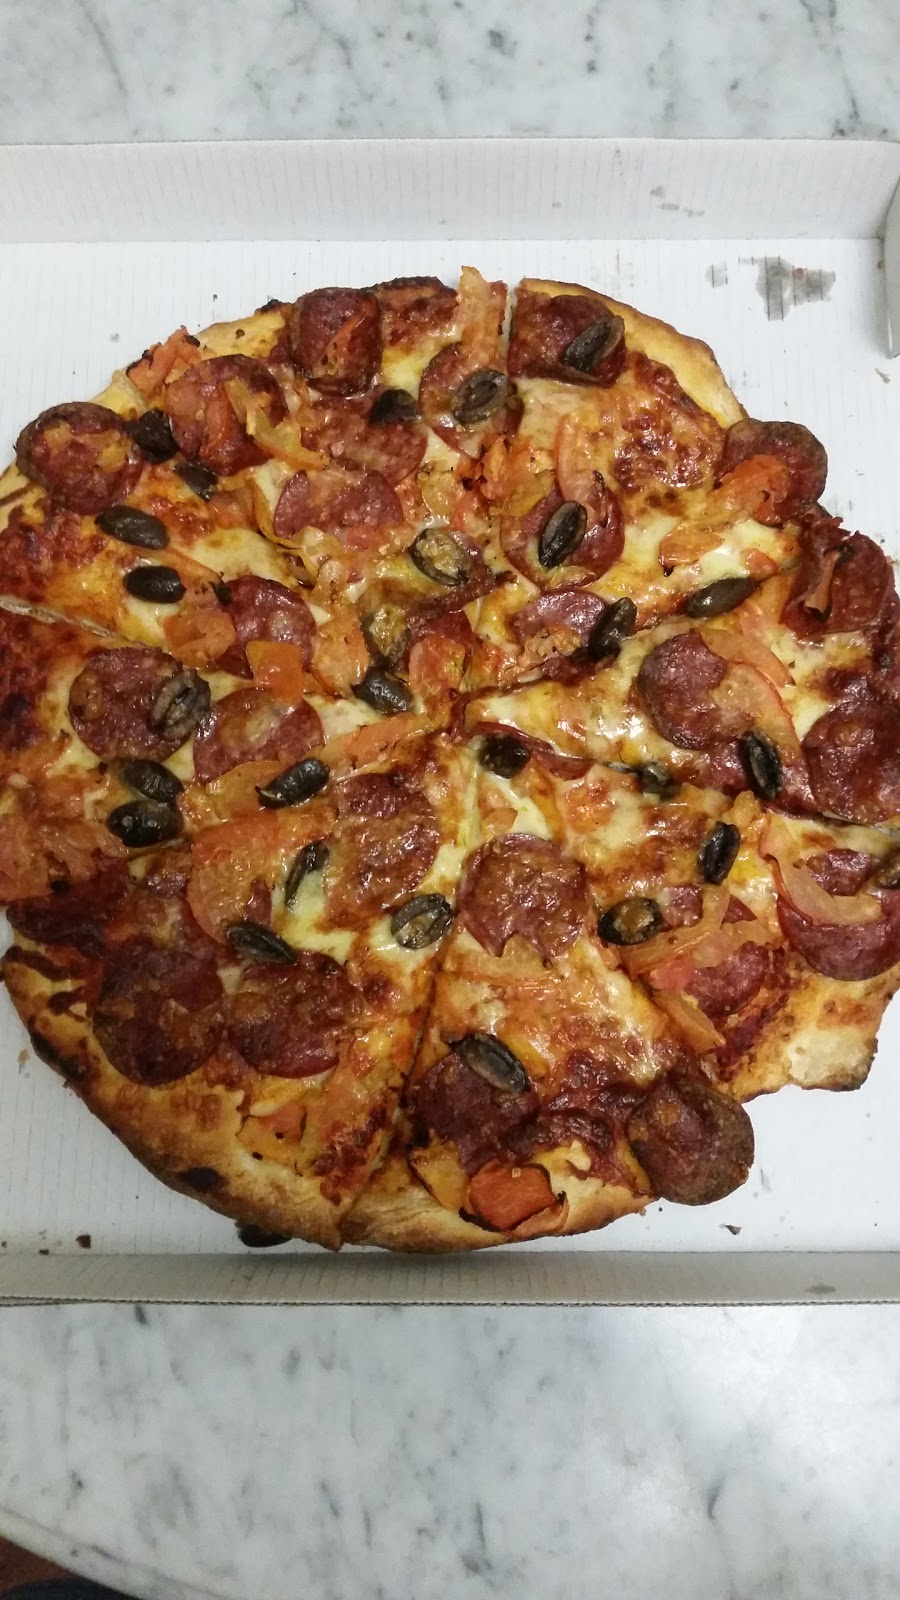 Basso Pizza | 5/63 Old Perth Rd, Bassendean WA 6054, Australia | Phone: (08) 9379 1111